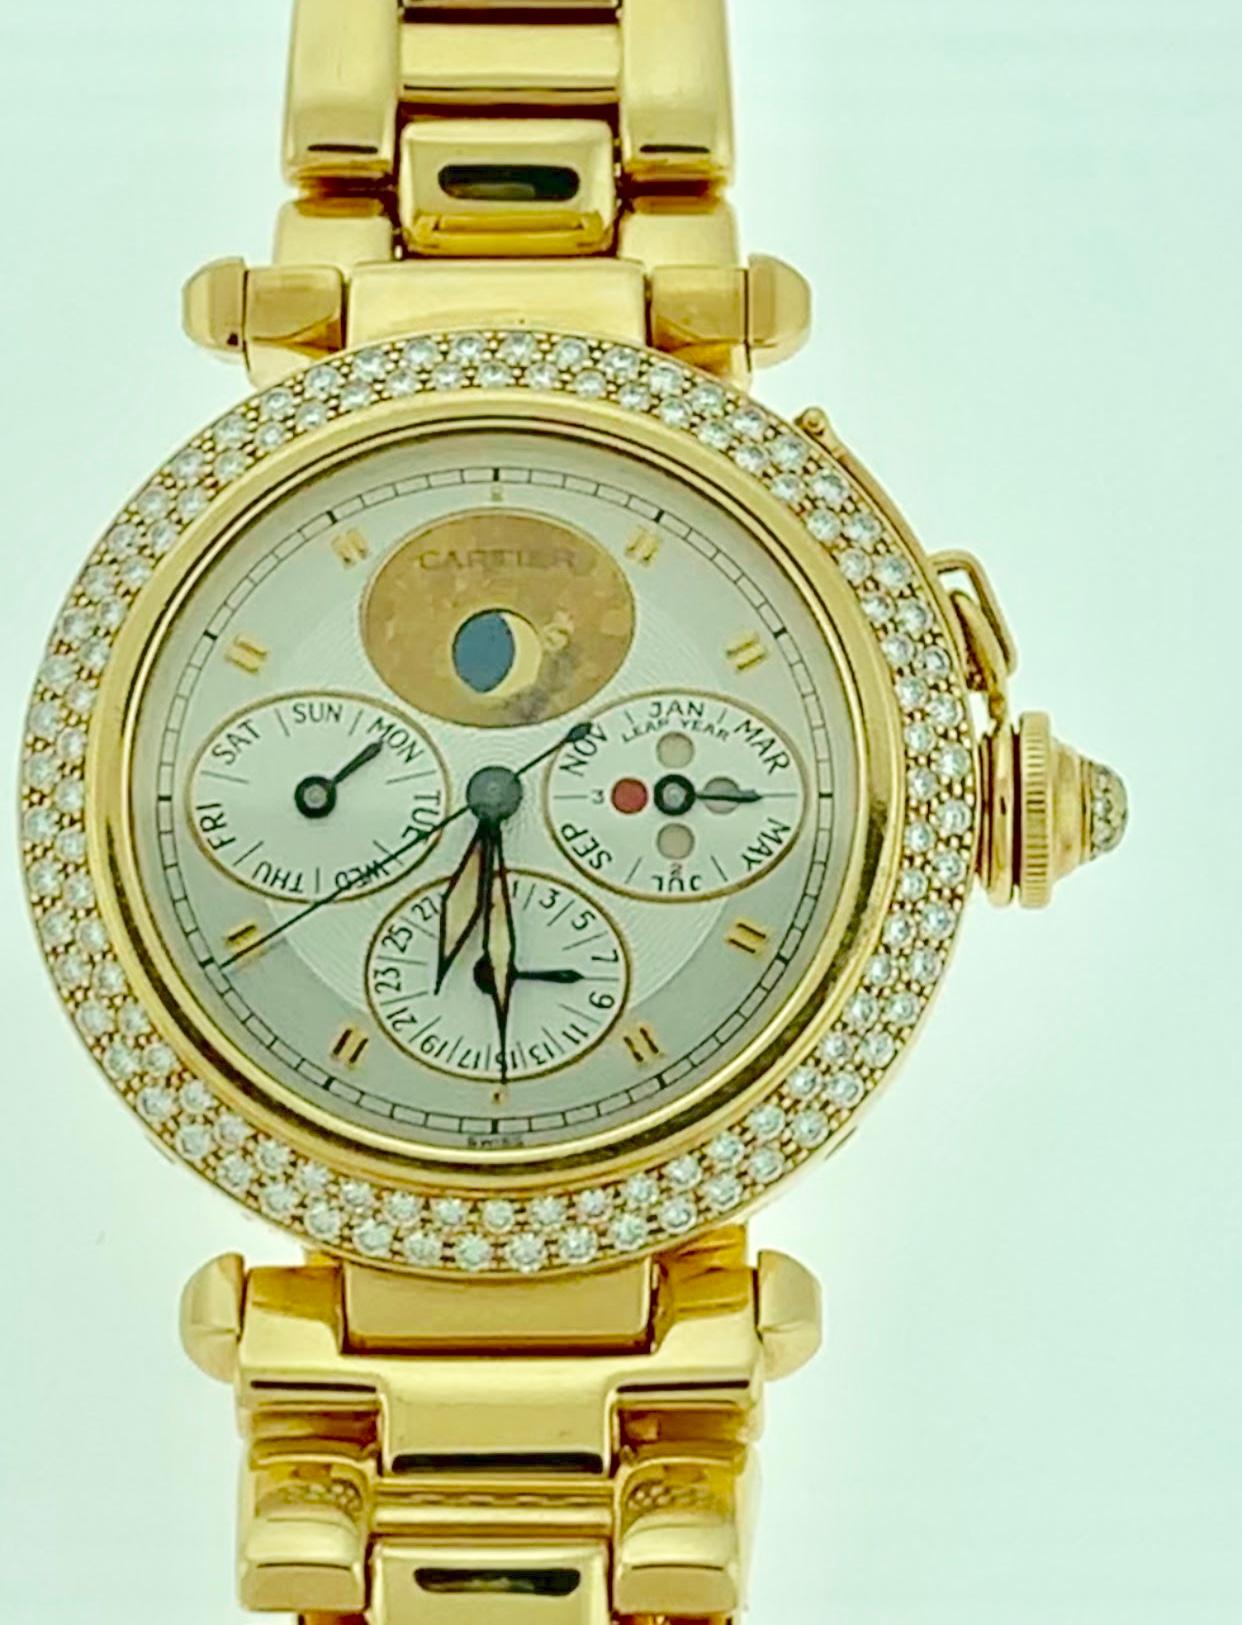 151 Gm 18 Karat Gold Cartier Pasha Factory Diamond Automatic Chrono Watch 2